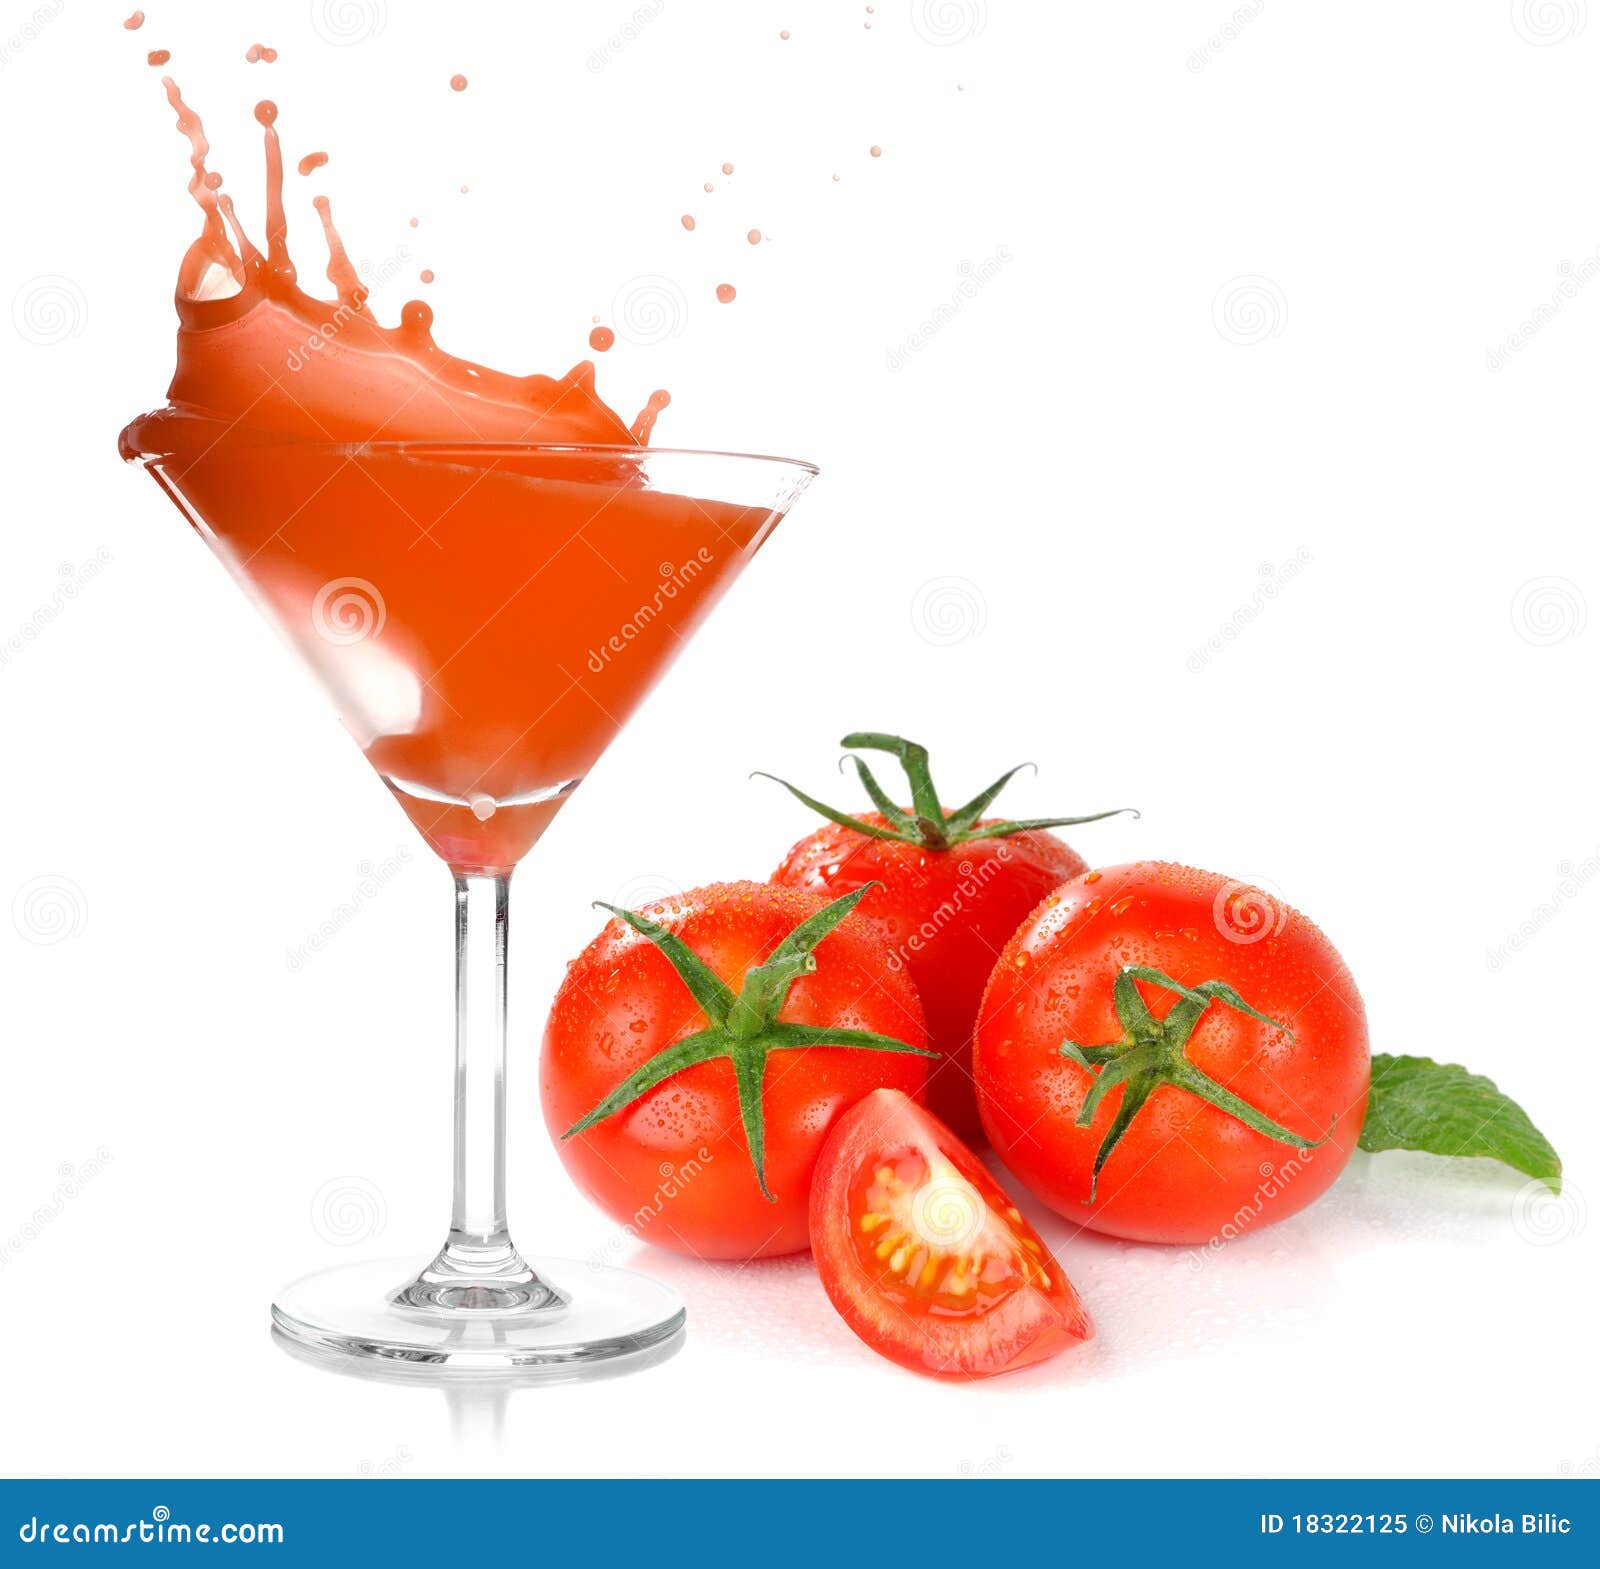 tomato juice clipart - photo #8